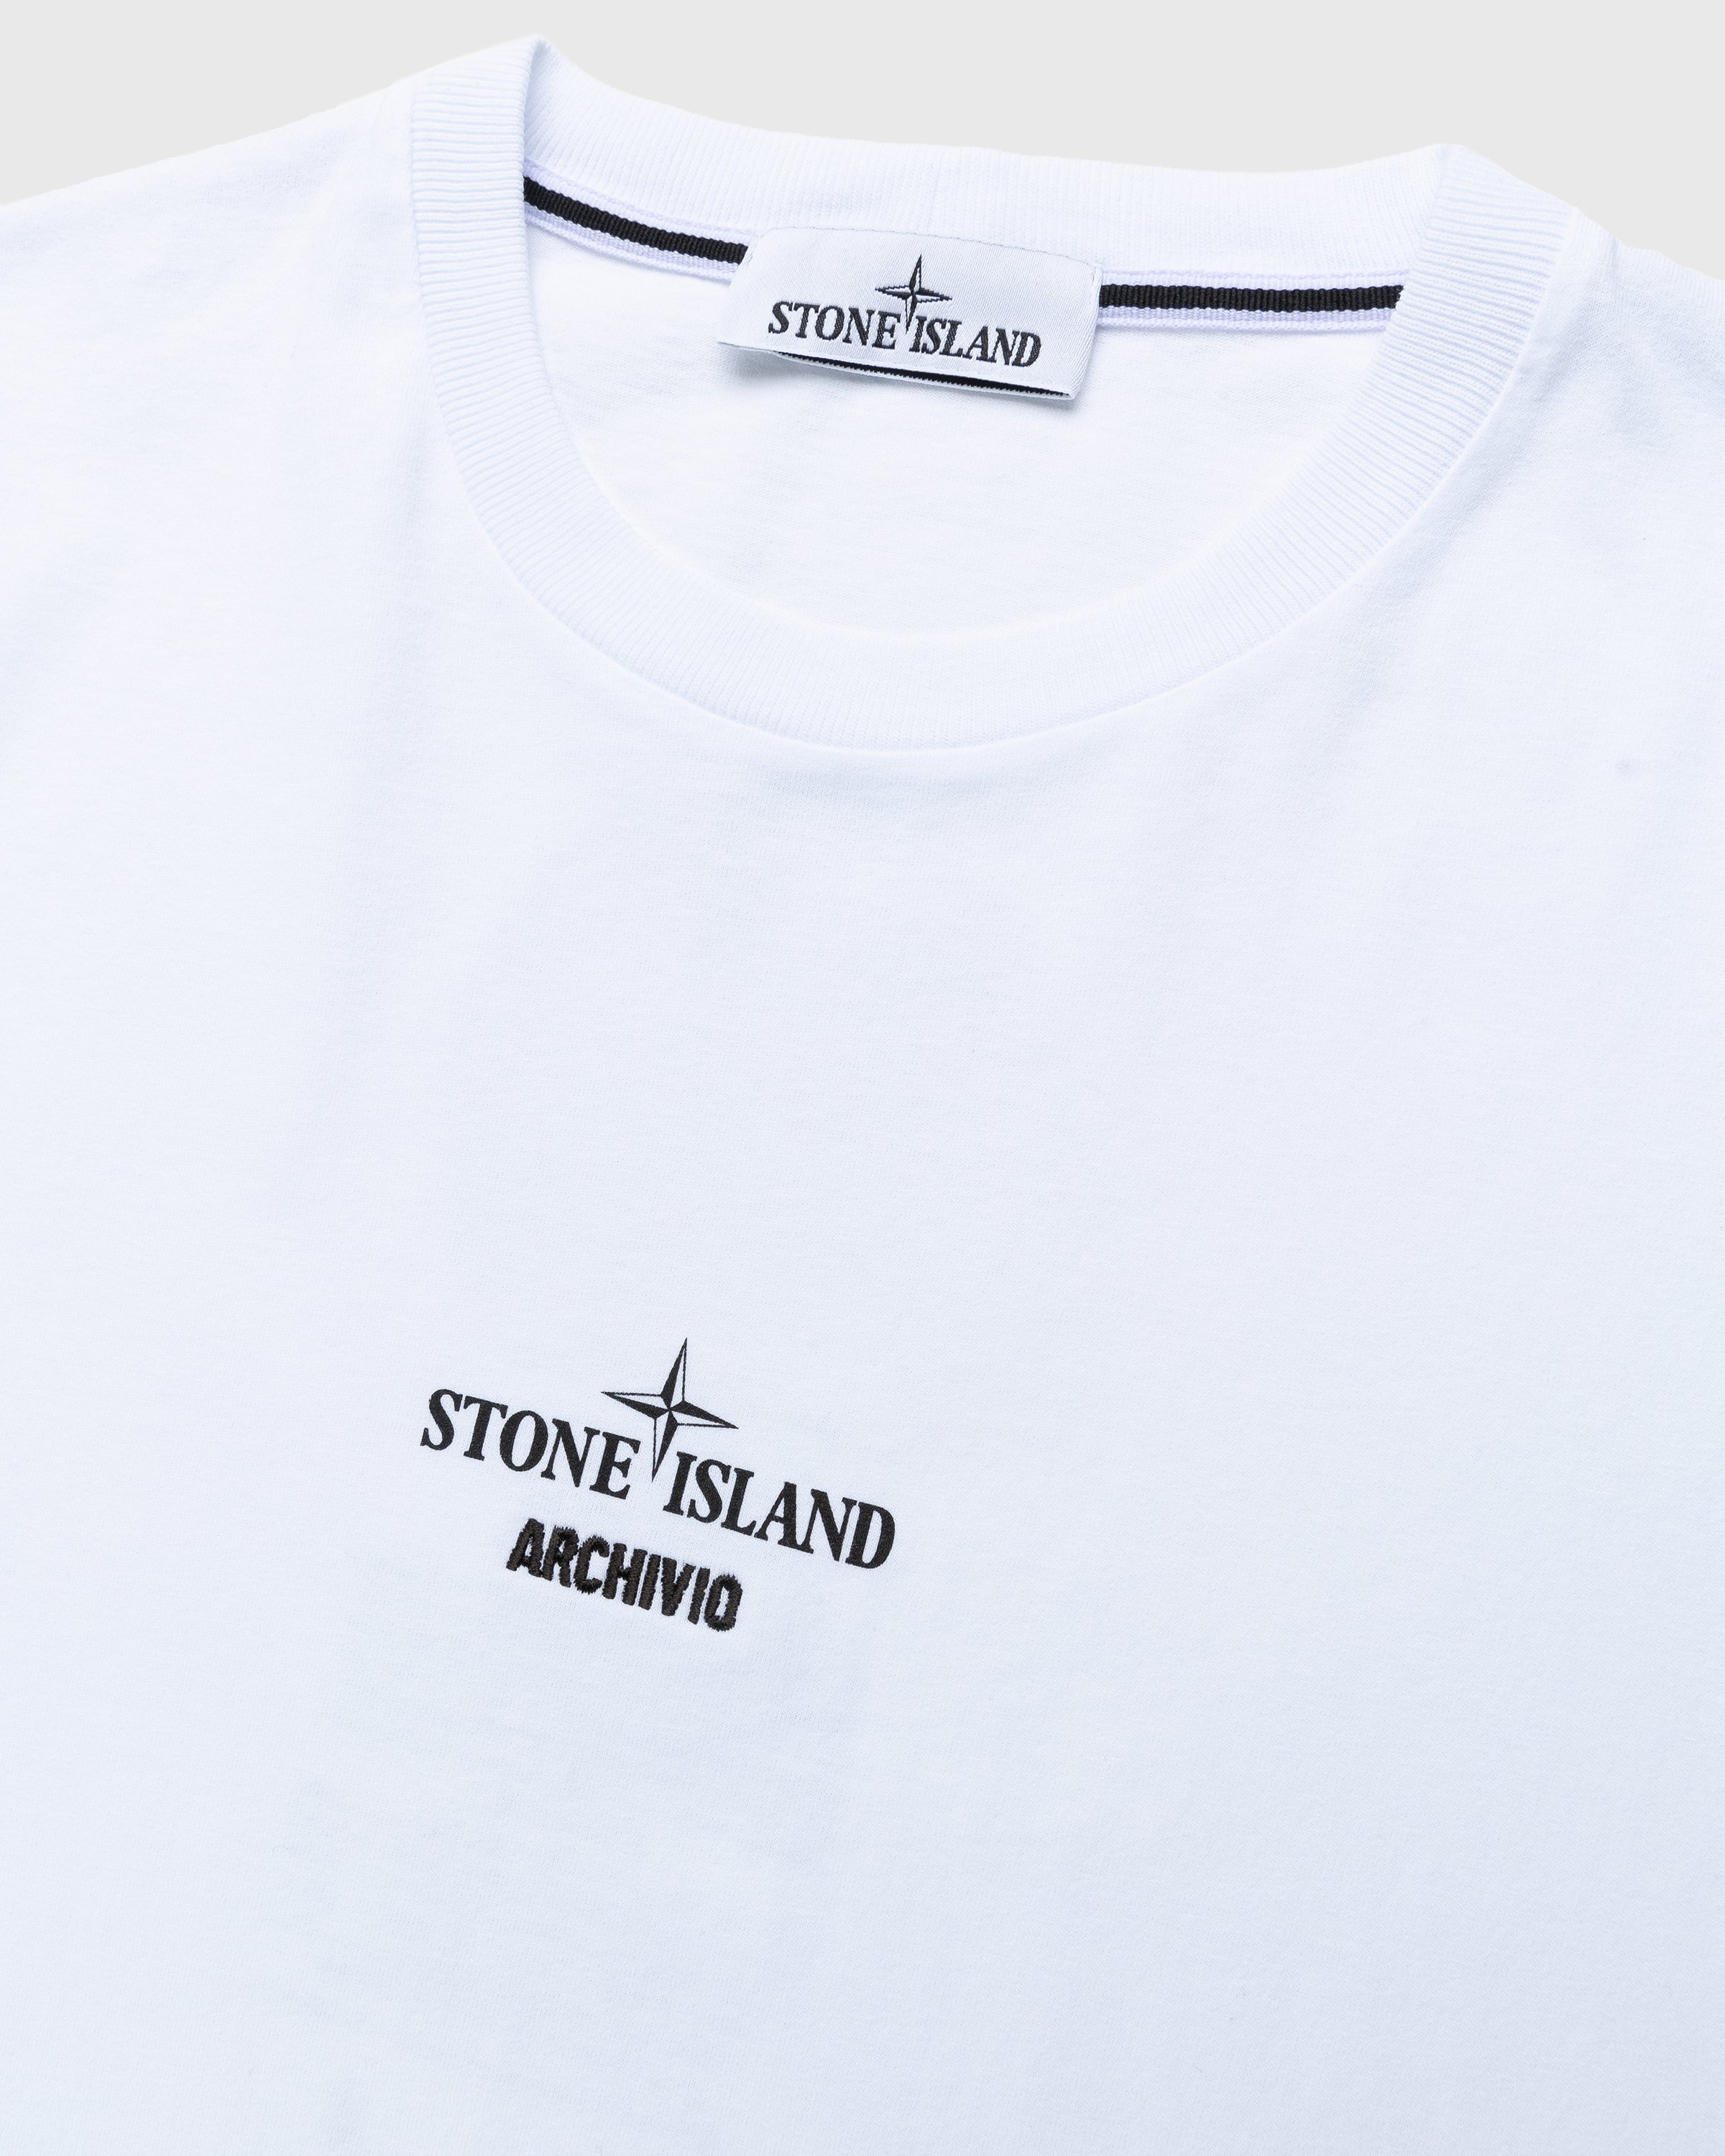 Stone Island - Archivio T-Shirt White - Clothing - White - Image 4